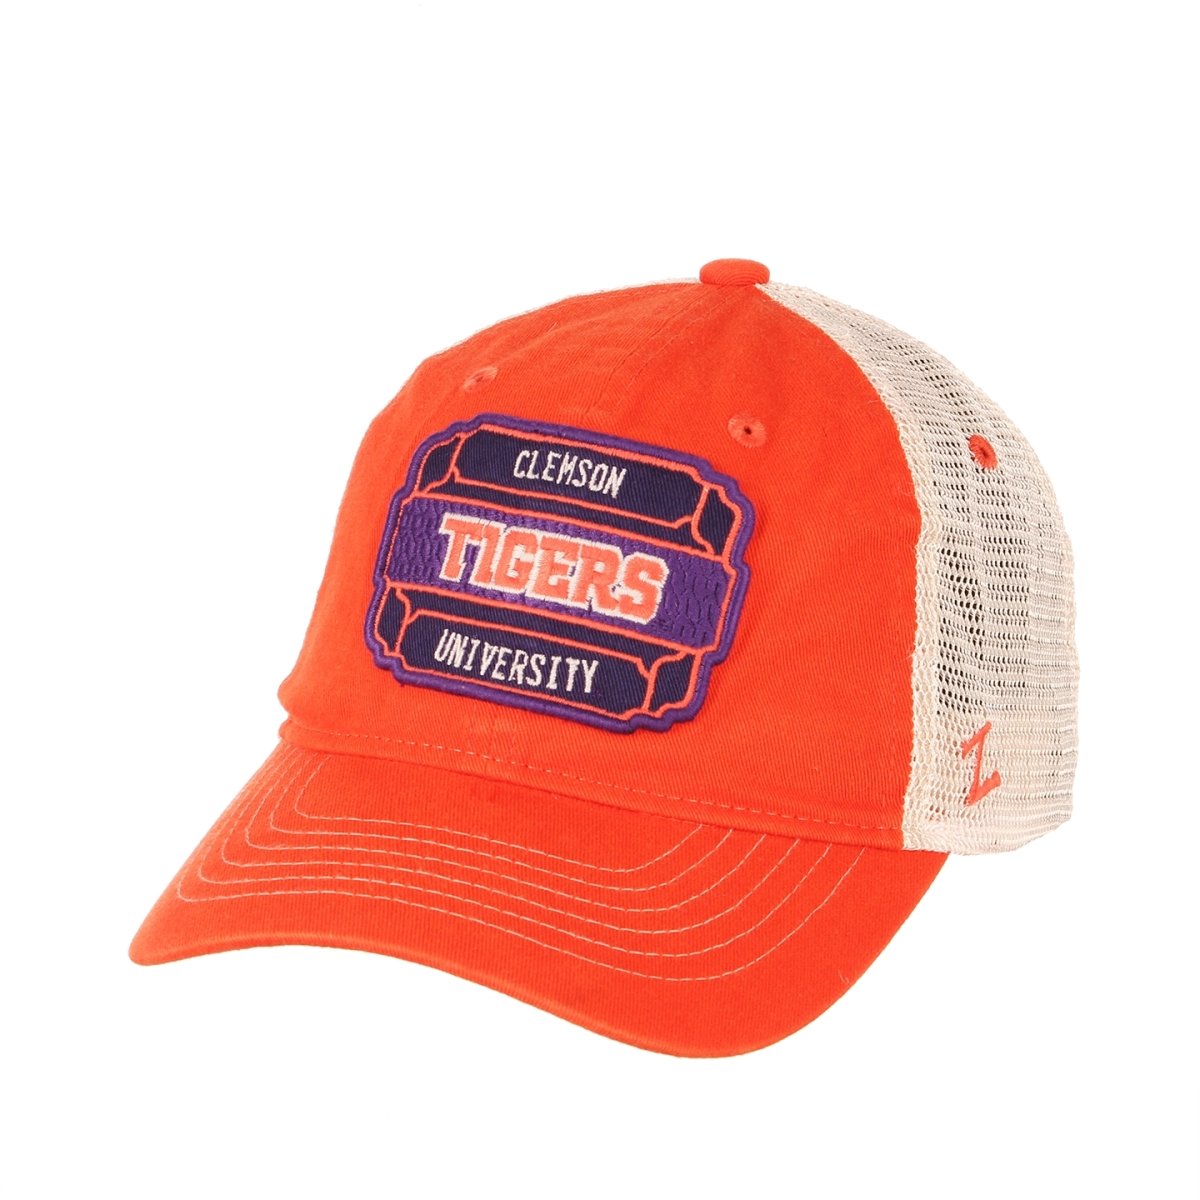 Clemson Tigers Detour University Patch Trucker Hat - Orange - Mr. Knickerbocker